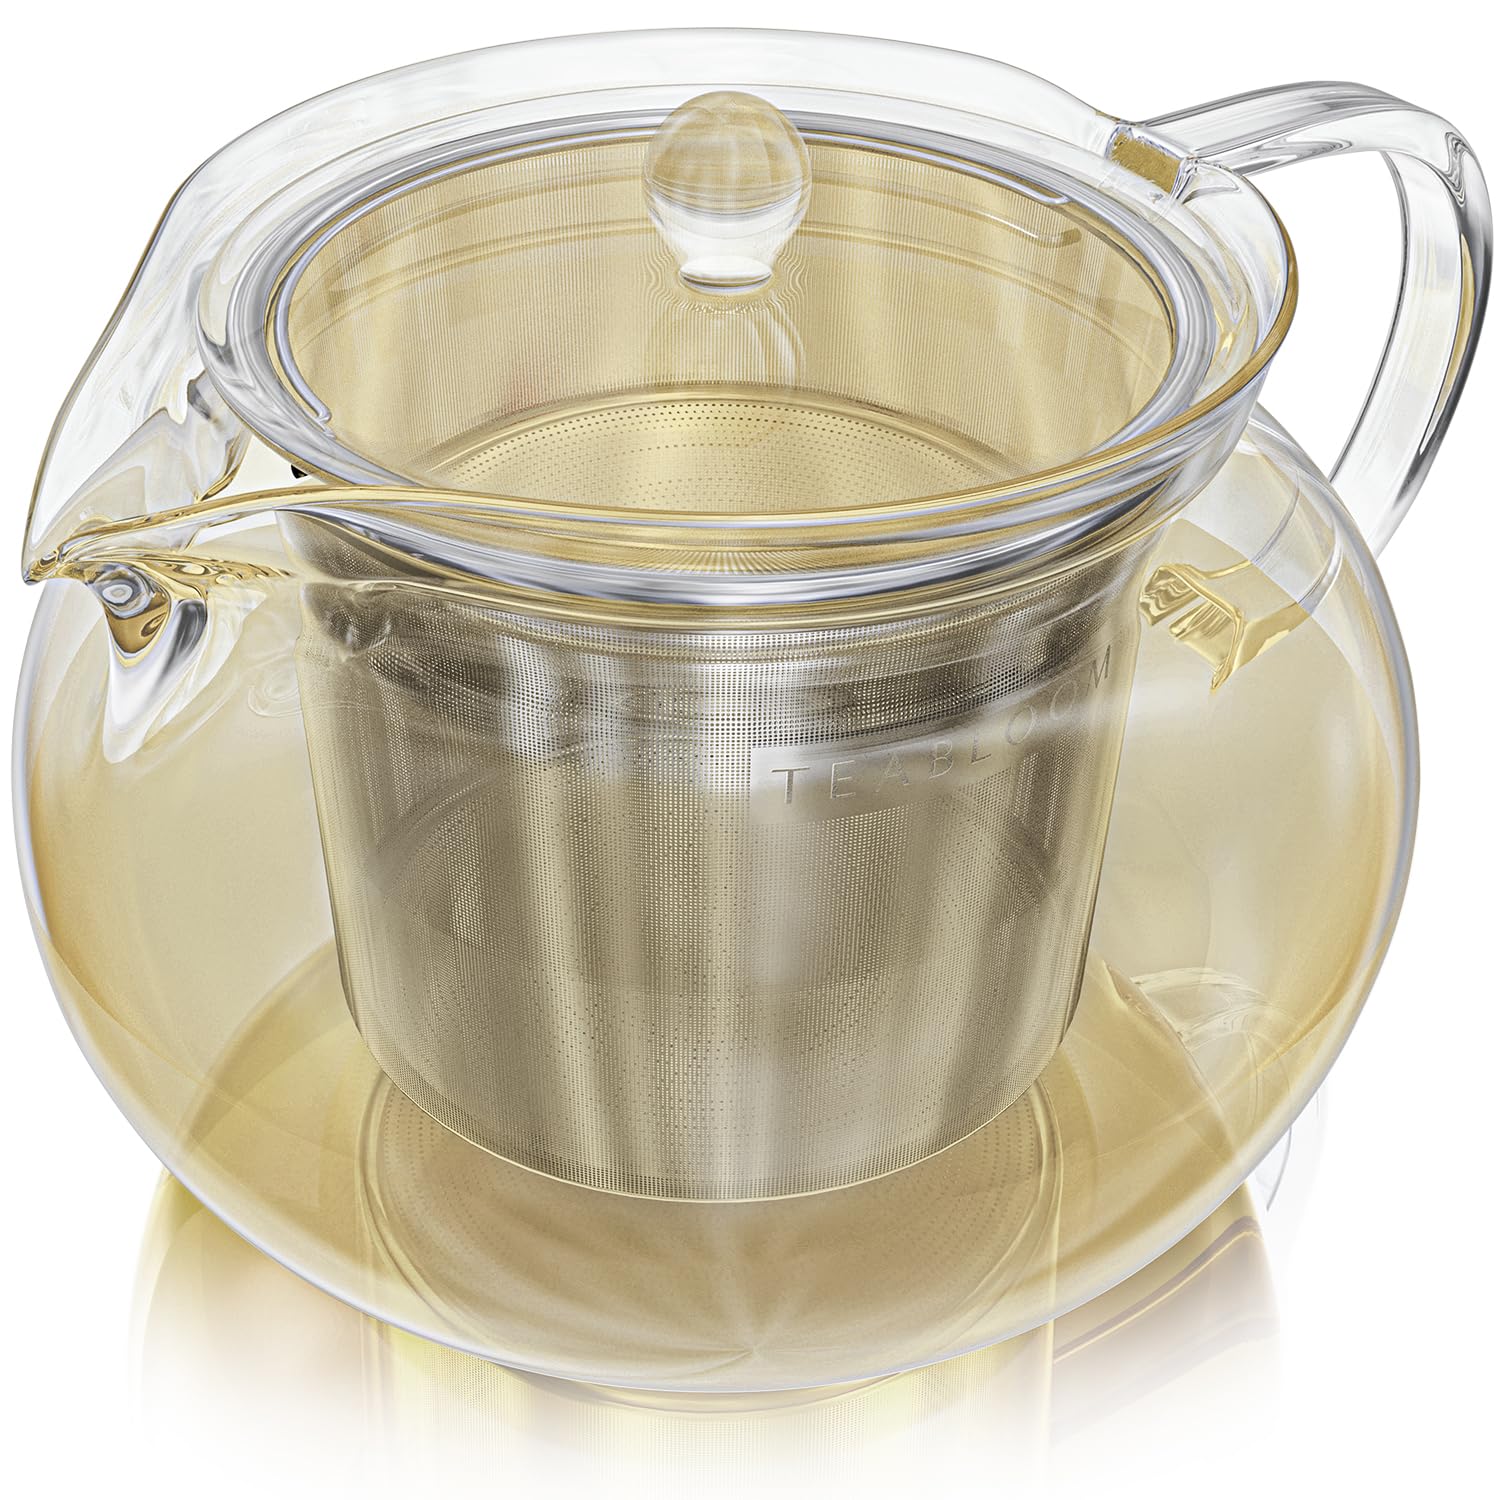 Teabloom Kyoto 2-in-1 Tea Kettle/Tea Maker – Heatproof Glass Teapot with Removable Loose Tea Filter – Tea Connoisseur's Choice